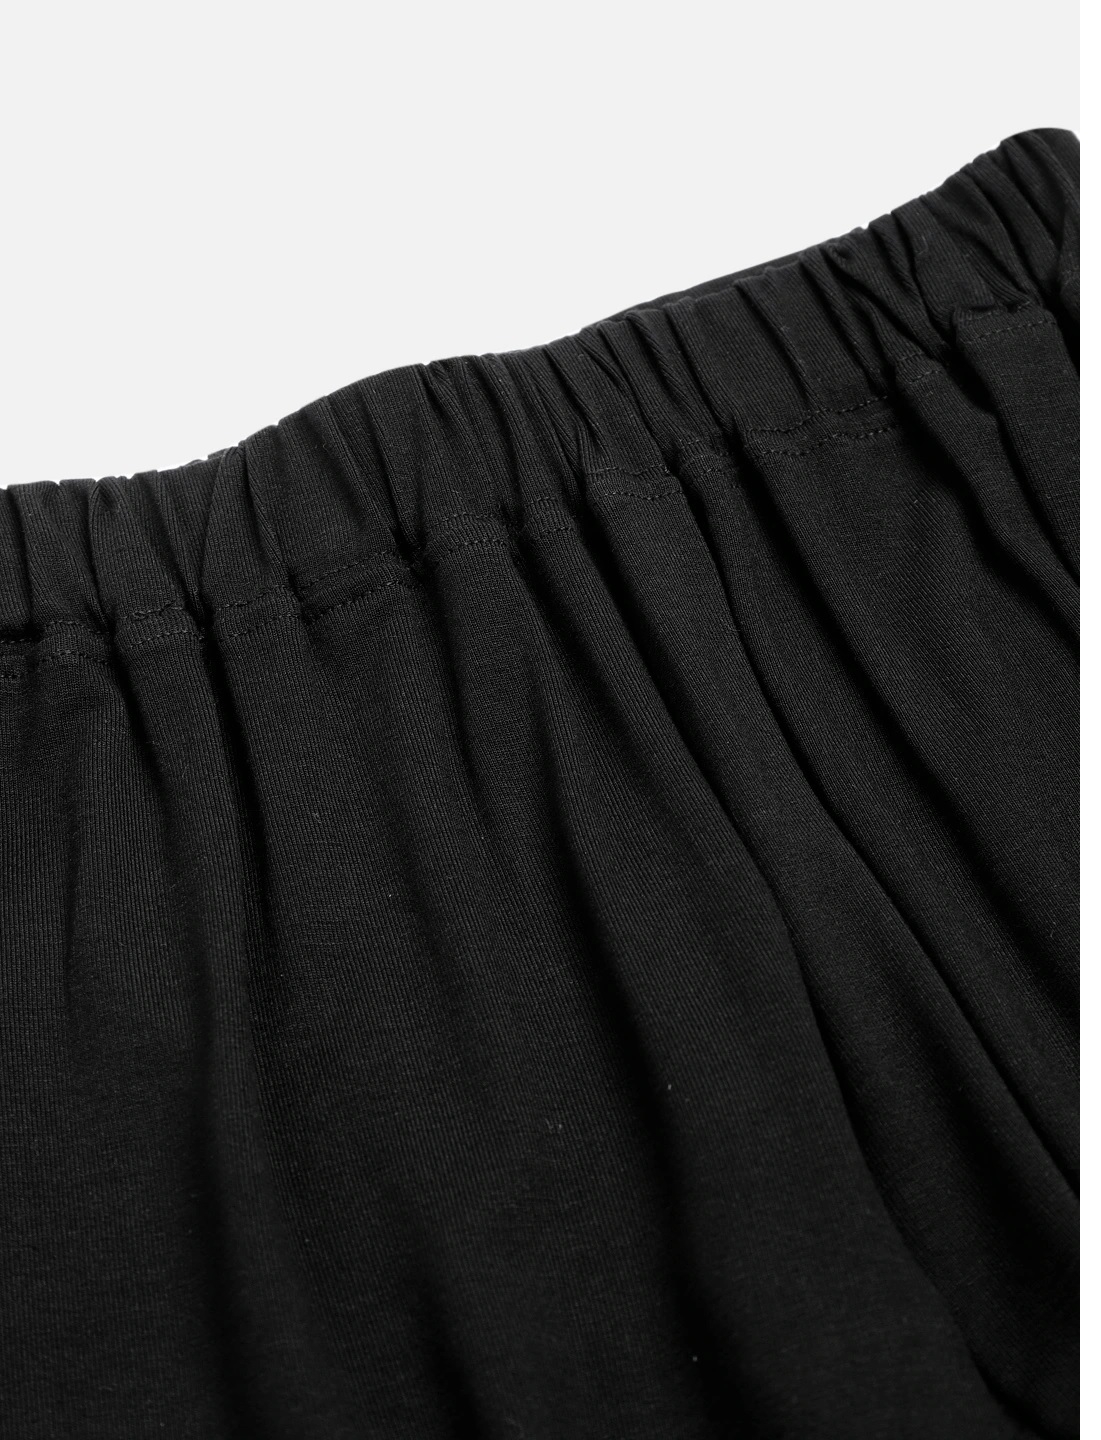 SEYBIL | SEYBIL Girls Pack of 2 Solid Slim Fit Shorts 1